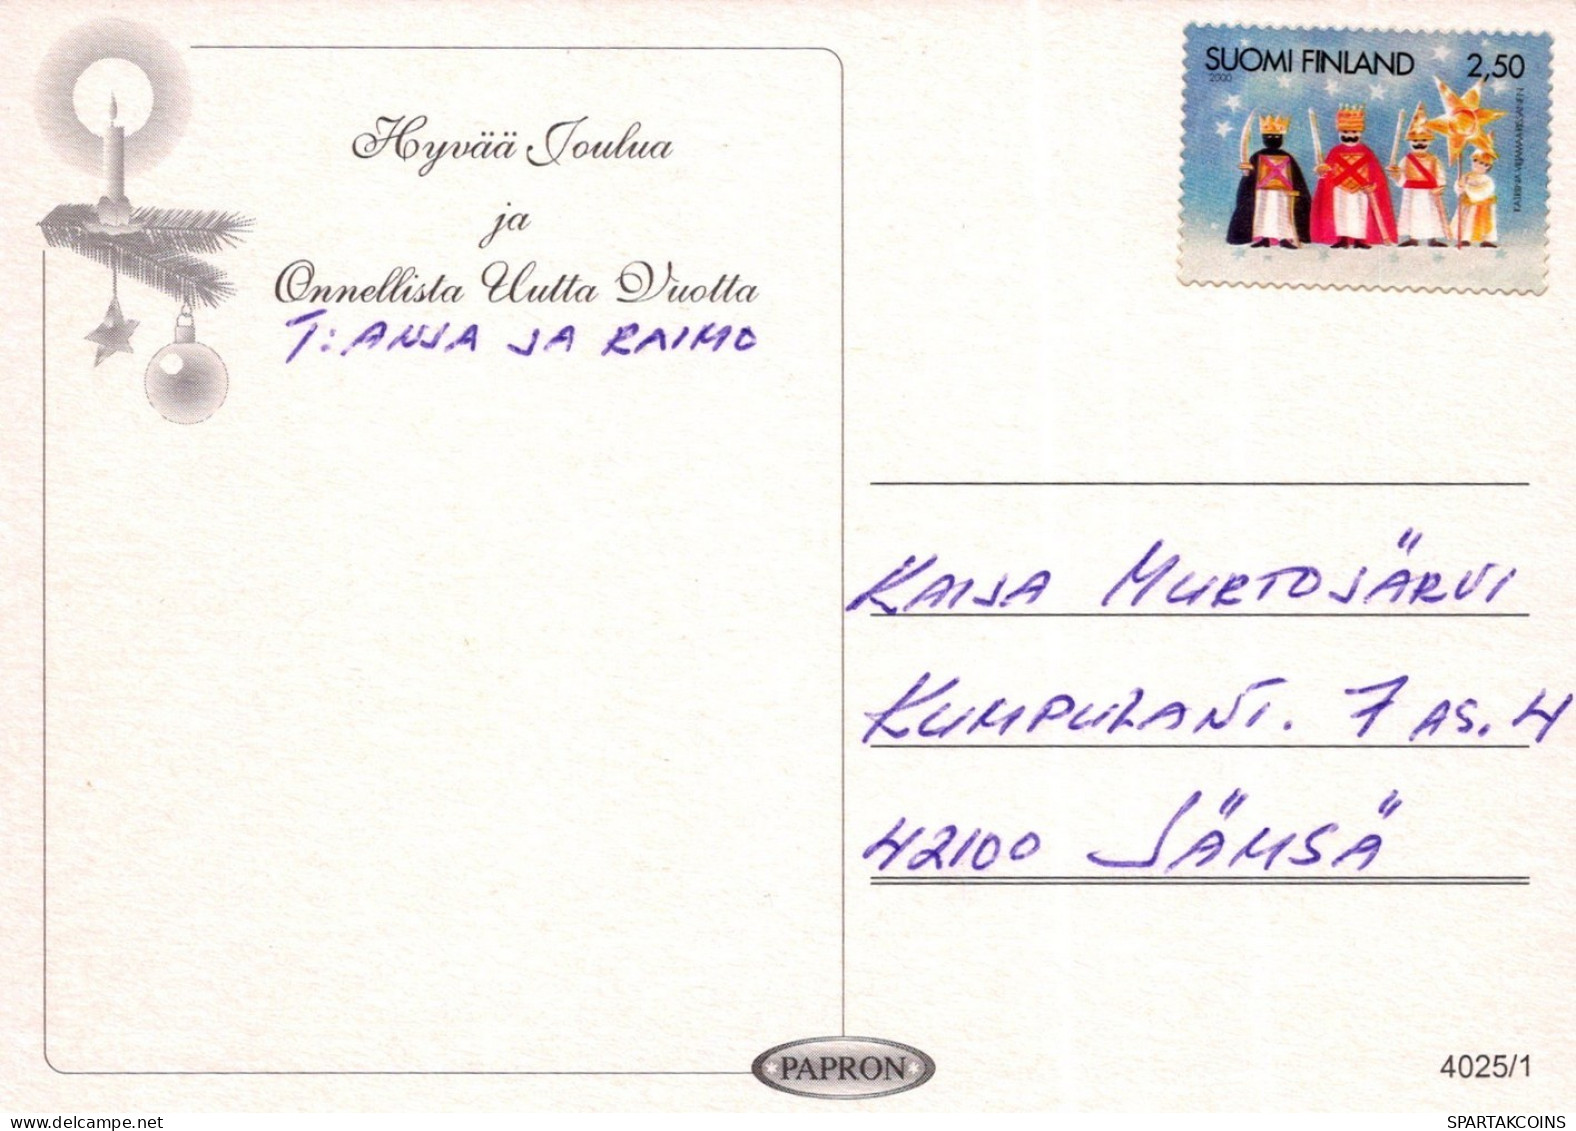 SANTA CLAUS CHRISTMAS Holidays Vintage Postcard CPSM #PAJ763.GB - Kerstman